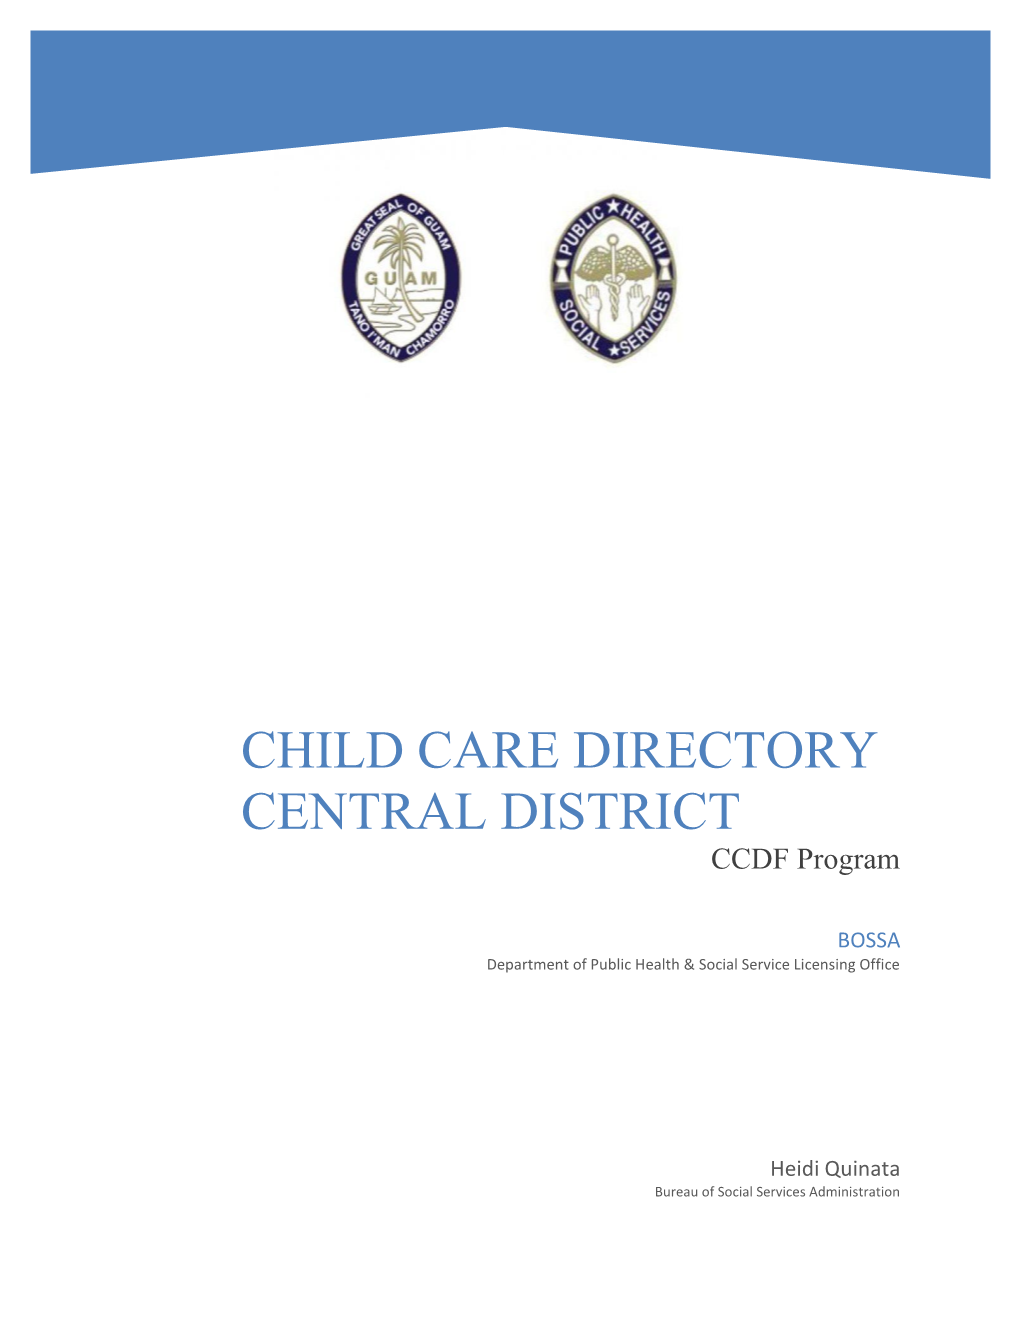 CHILD CARE DIRECTORY CENTRAL DISTRICT CCDF Program